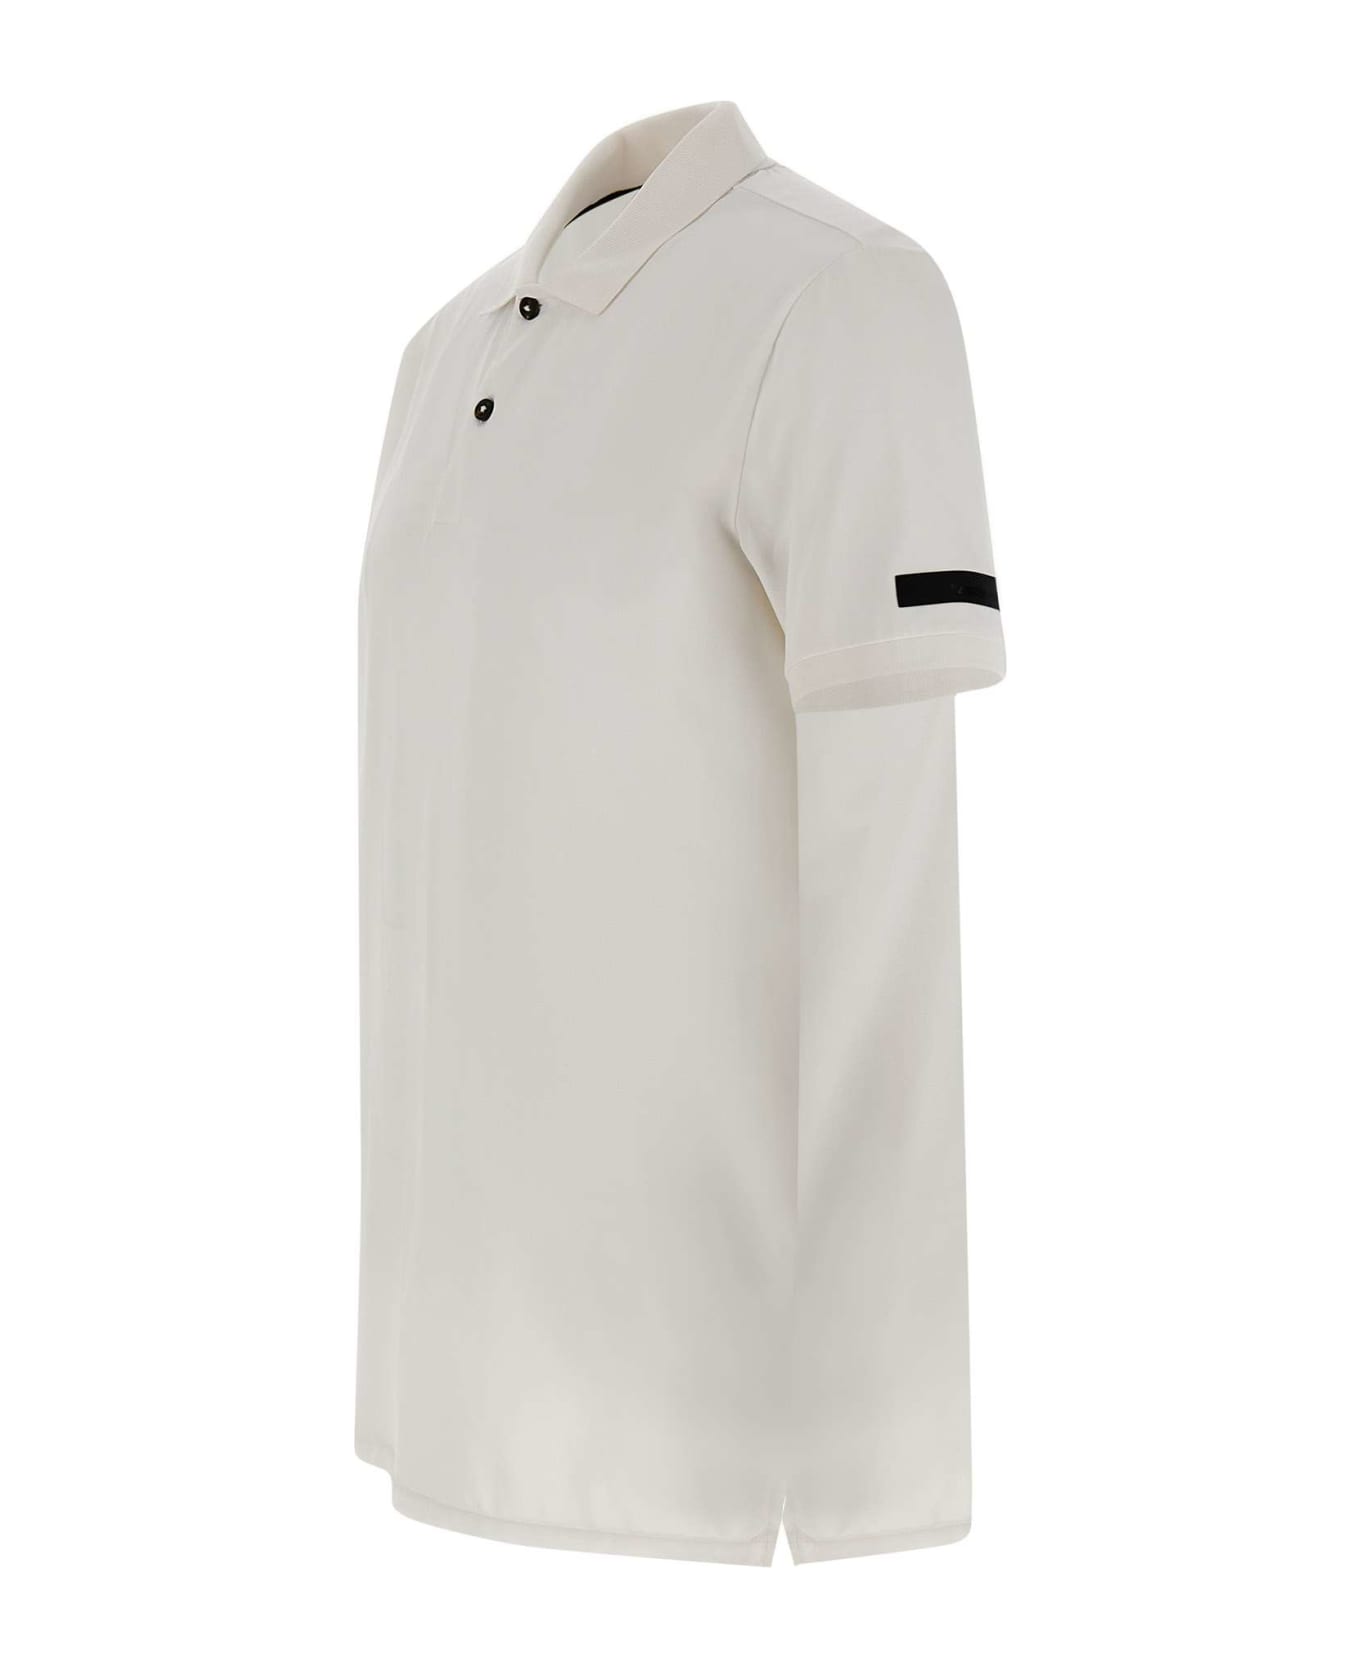 RRD - Roberto Ricci Design "gdy" Oxford Cotton Polo Shirt - WHITE